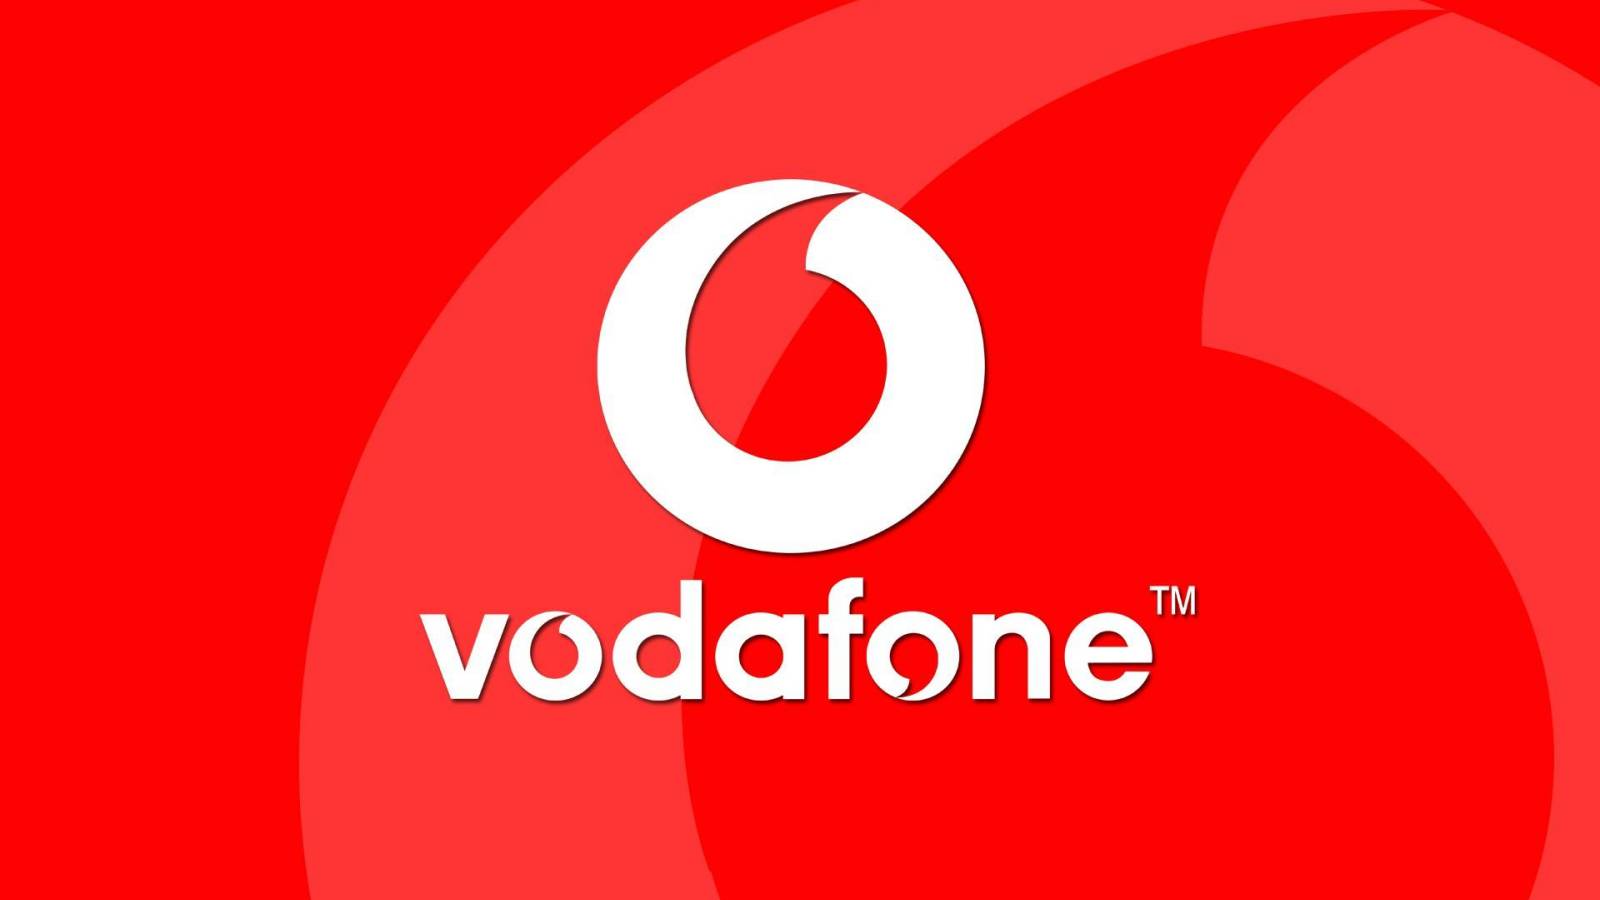 Vodafone Decizia Oficiala da GRATUIT Toata Vara Clientilor Romania